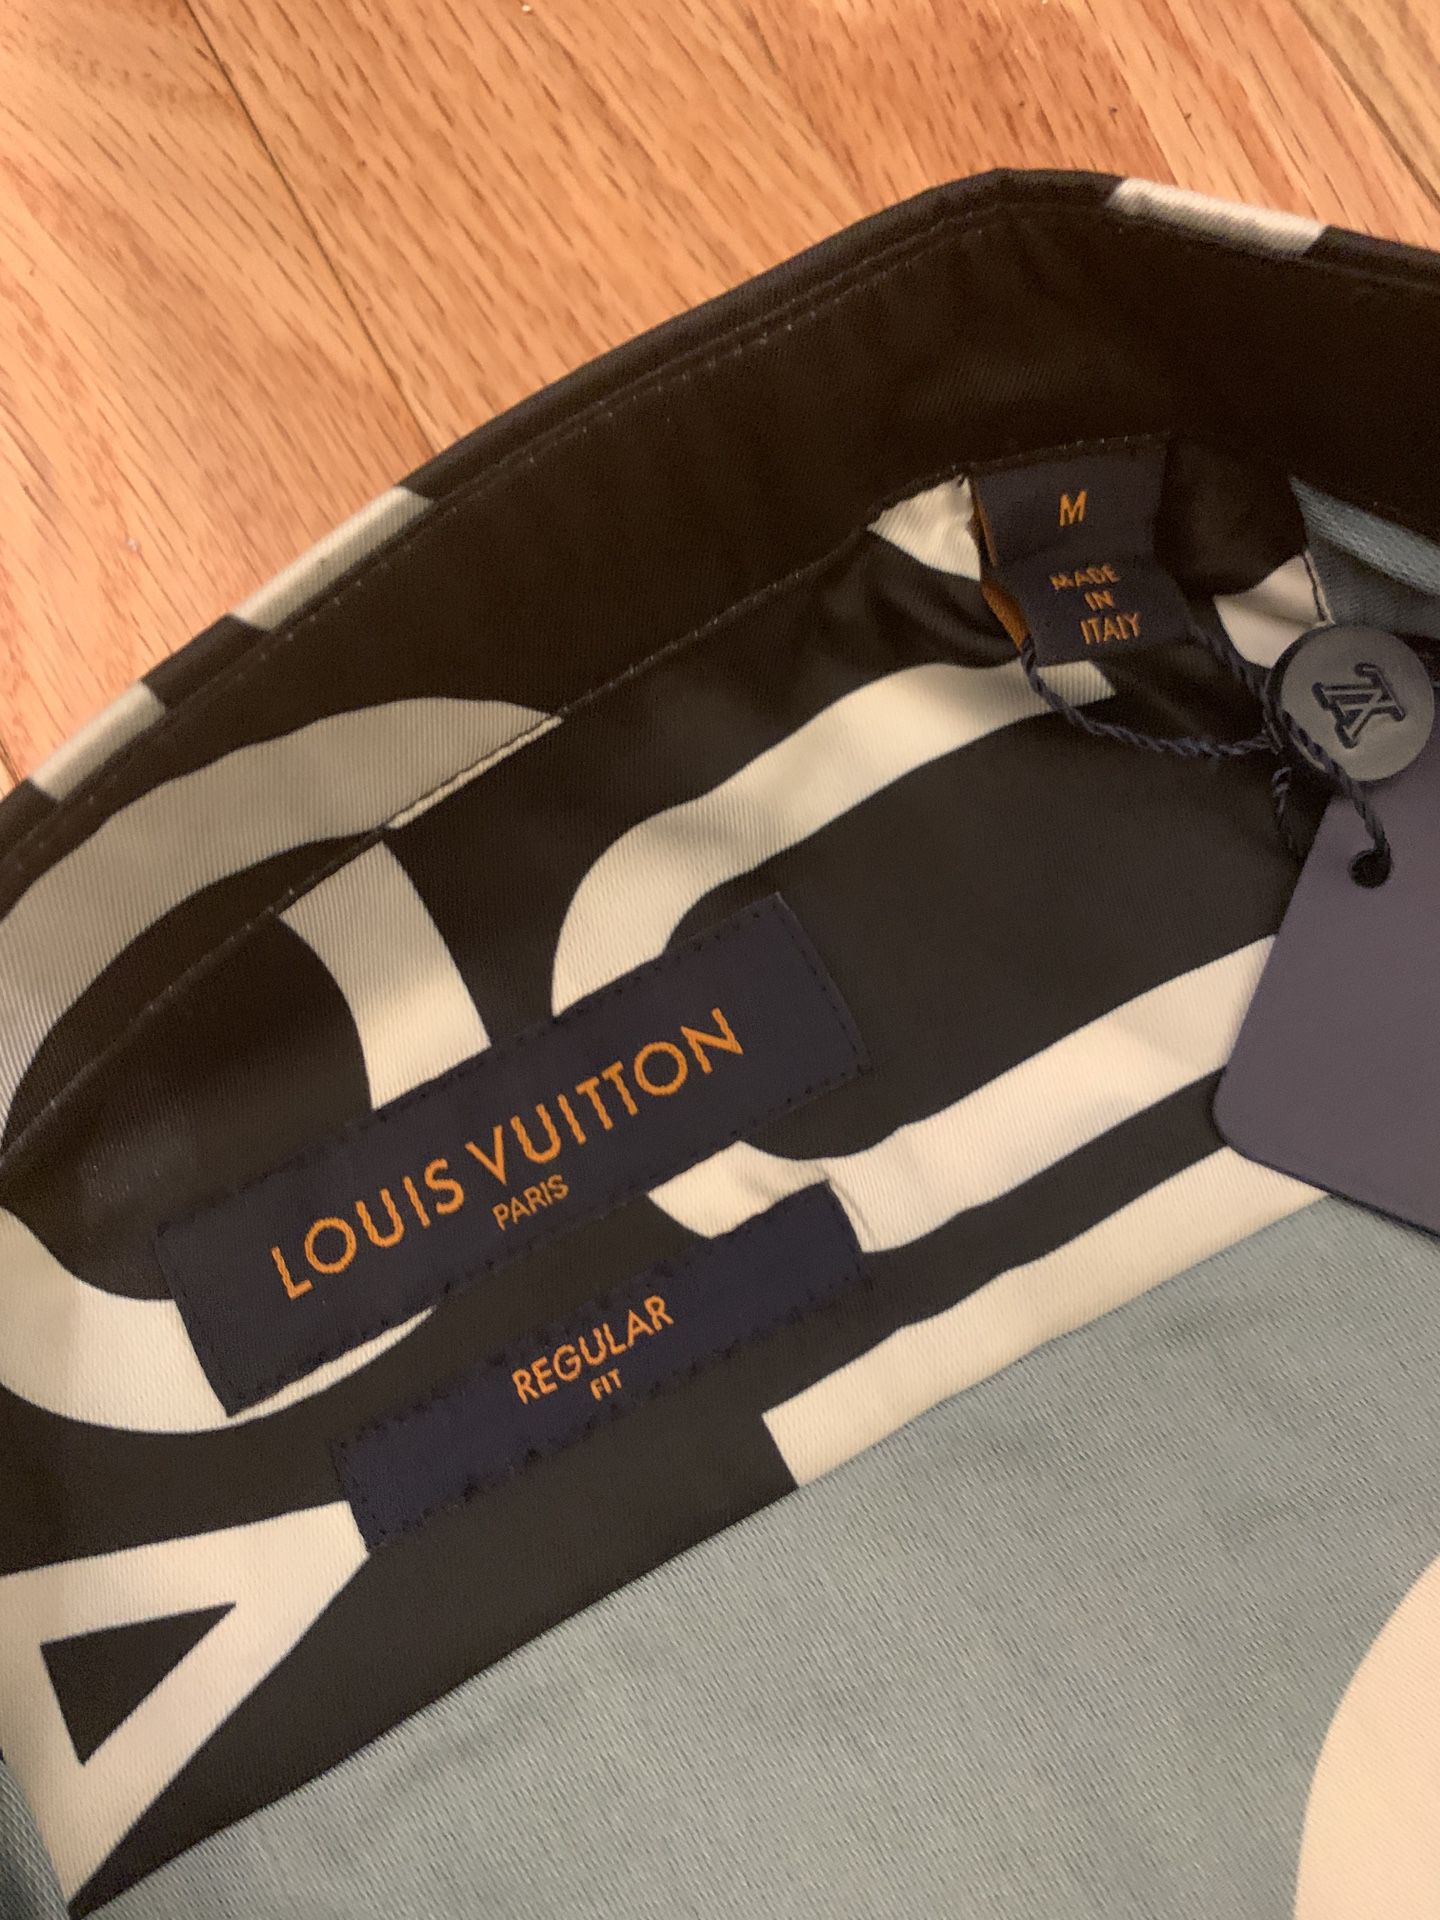 Louis Vuitton for Sale in Boston, MA - OfferUp